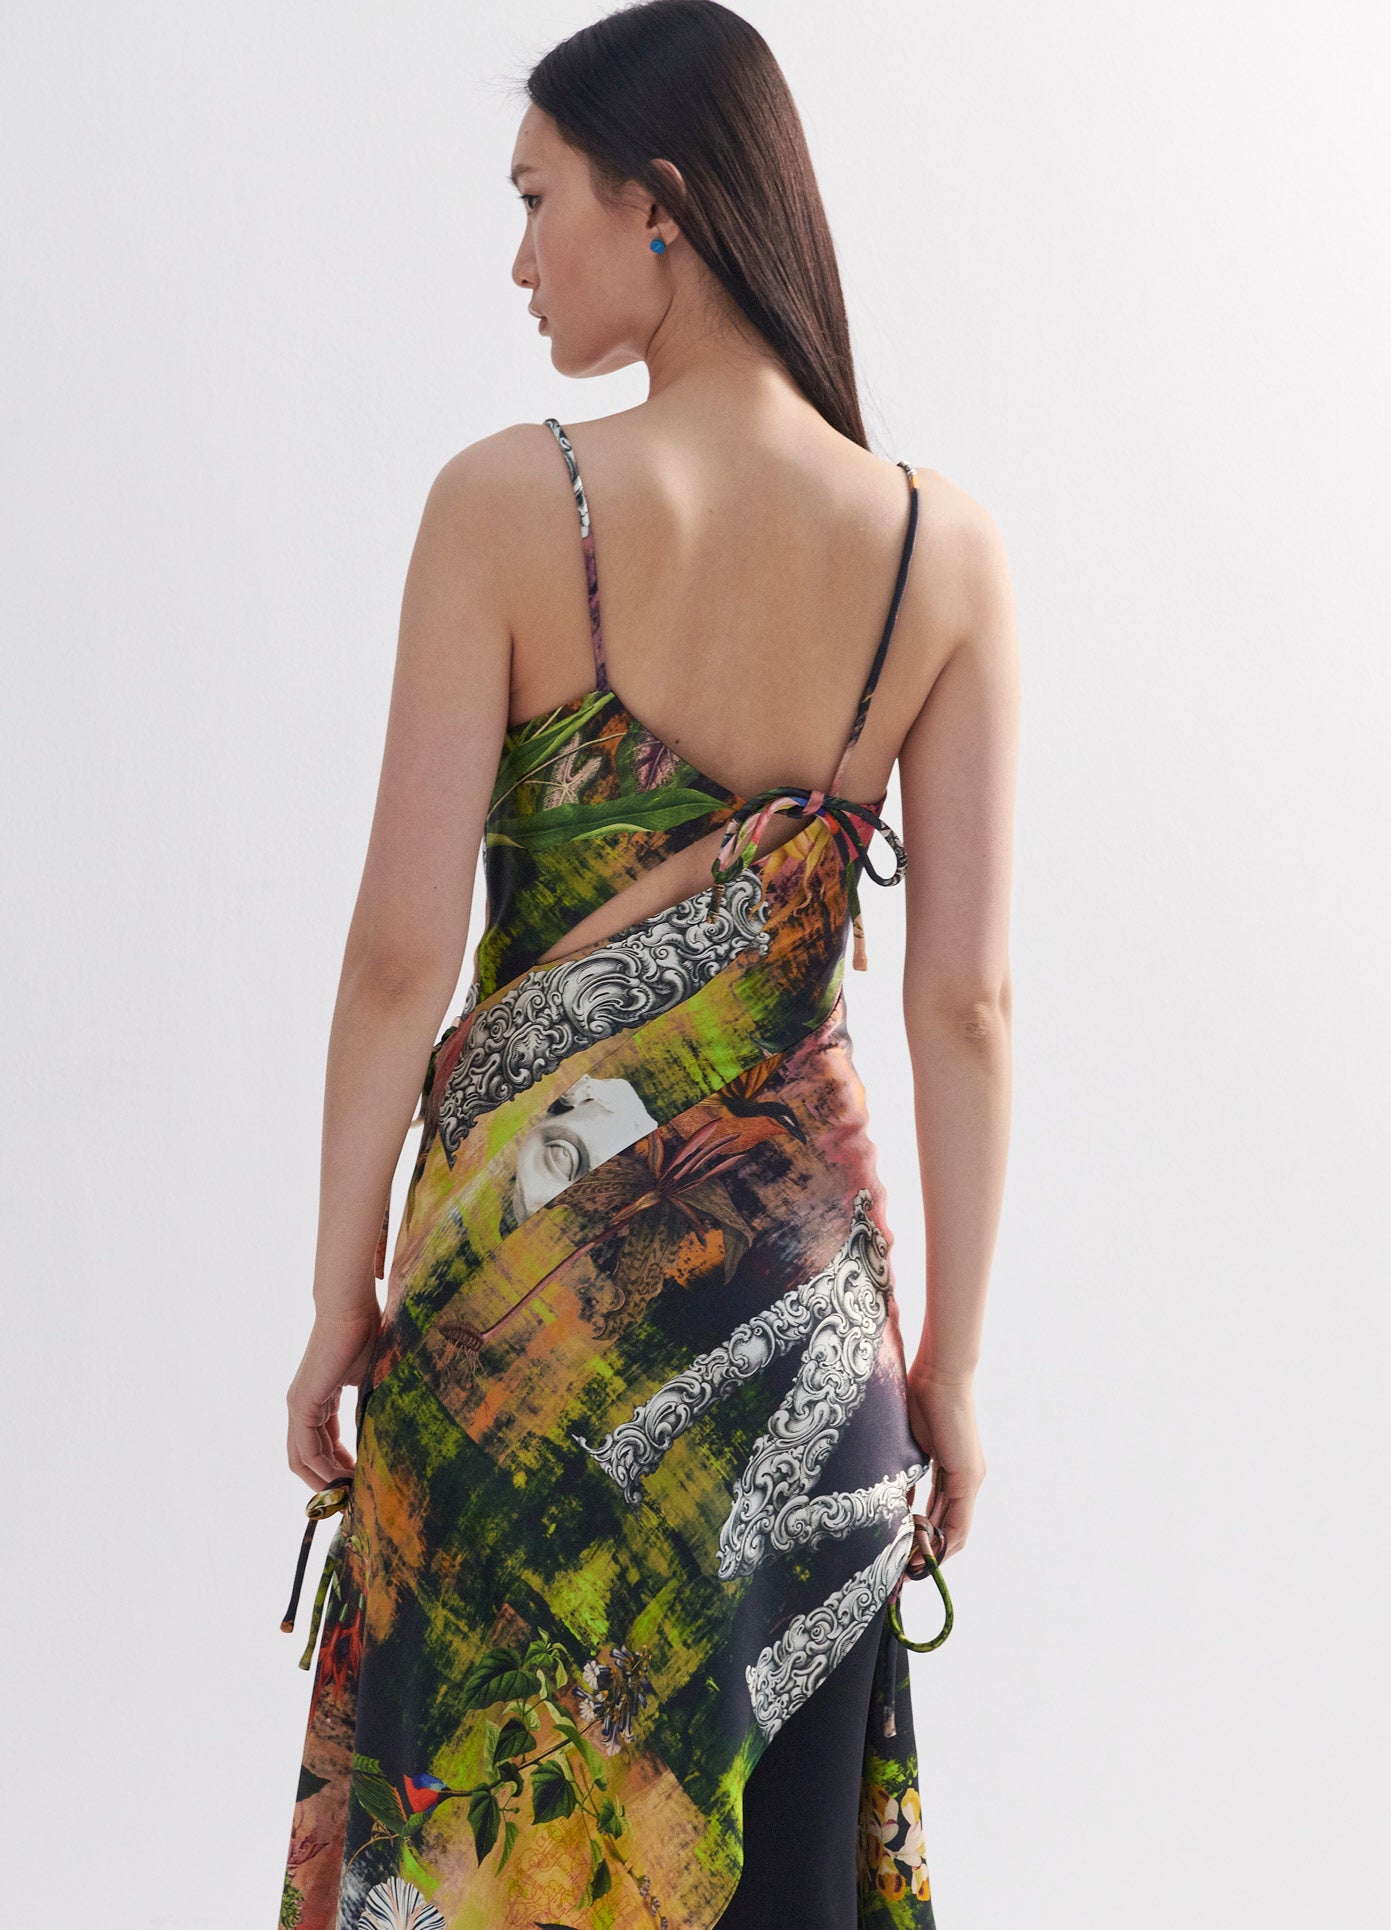 MONSE Print Slip Dress in Print Multi on Model Back View